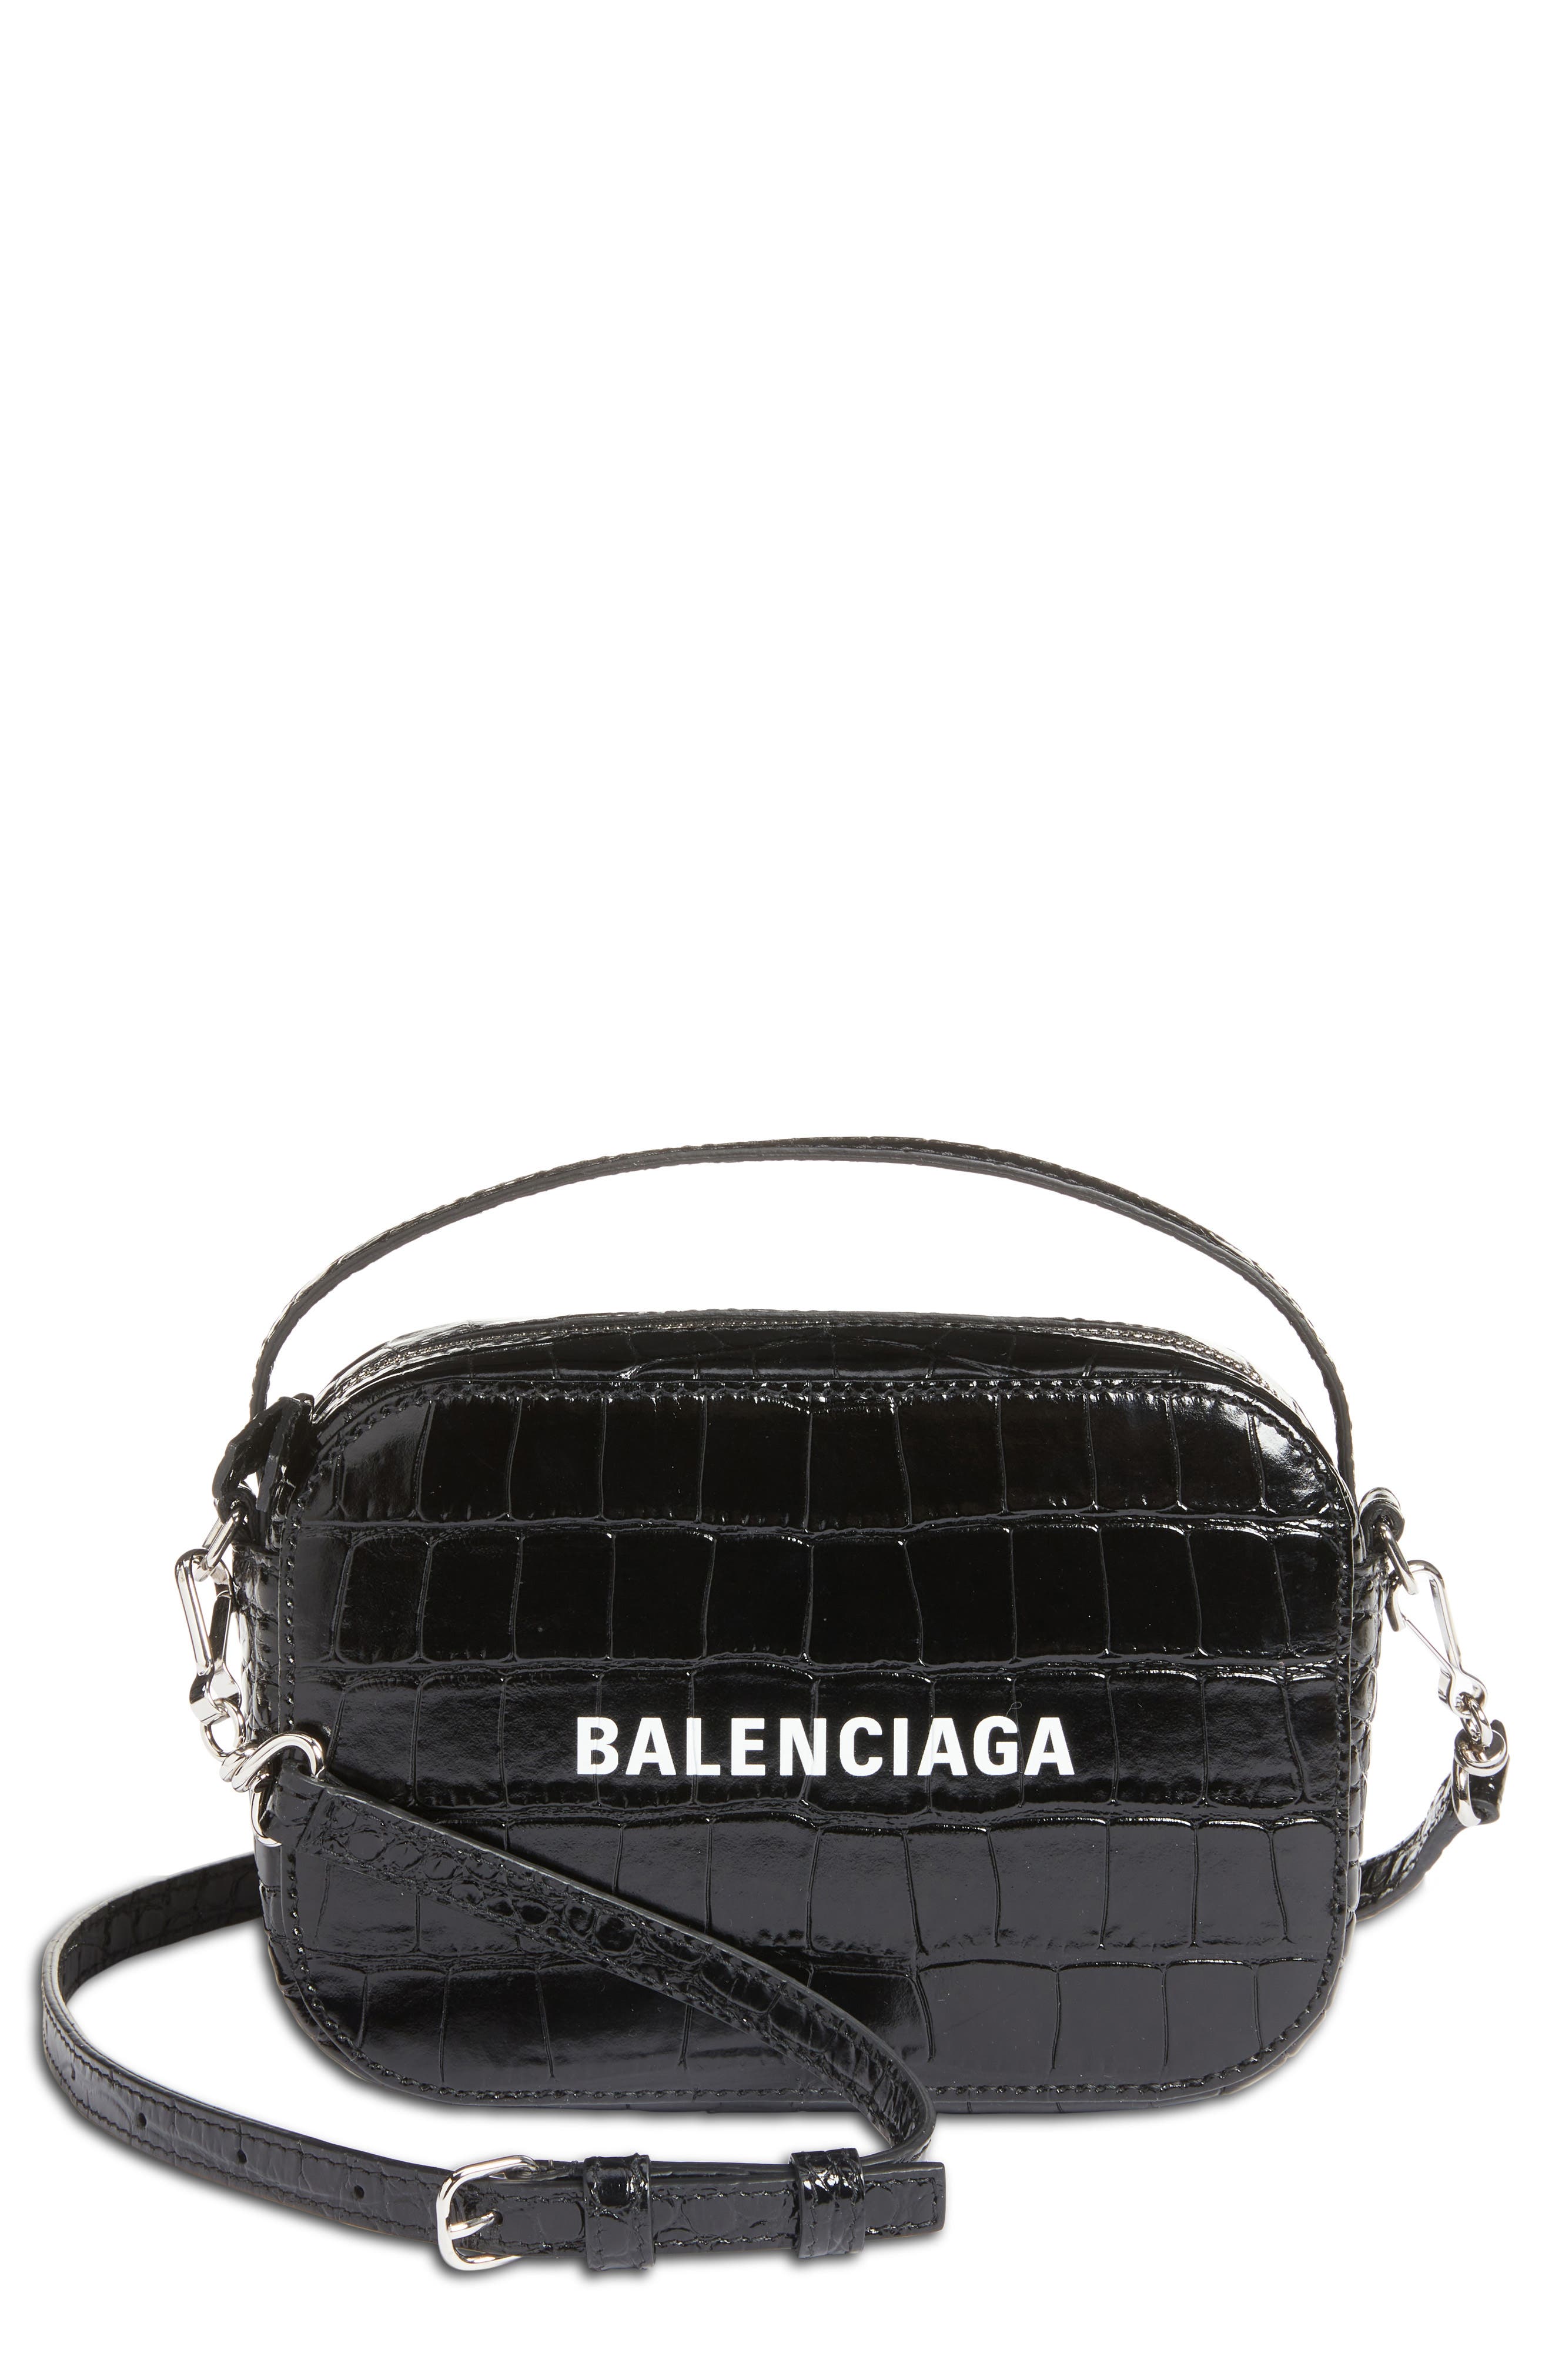 ressource ly frynser Balenciaga Handbags Canada Top Sellers - anuariocidob.org 1689505043